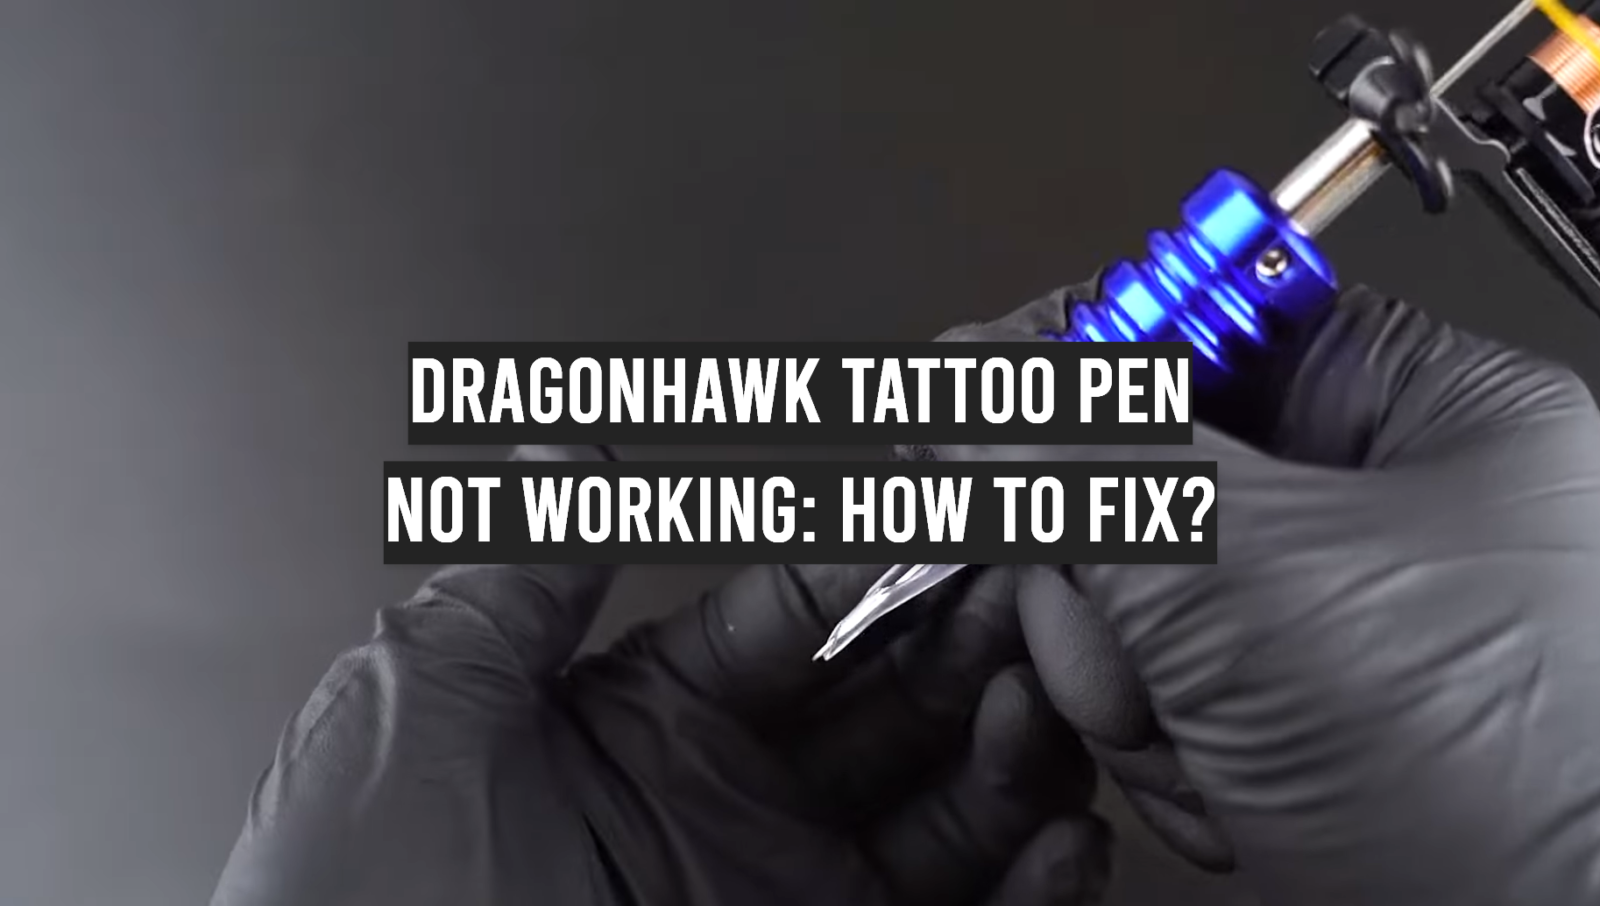 Dragonhawk Tattoo Pen Not Working: How to Fix?